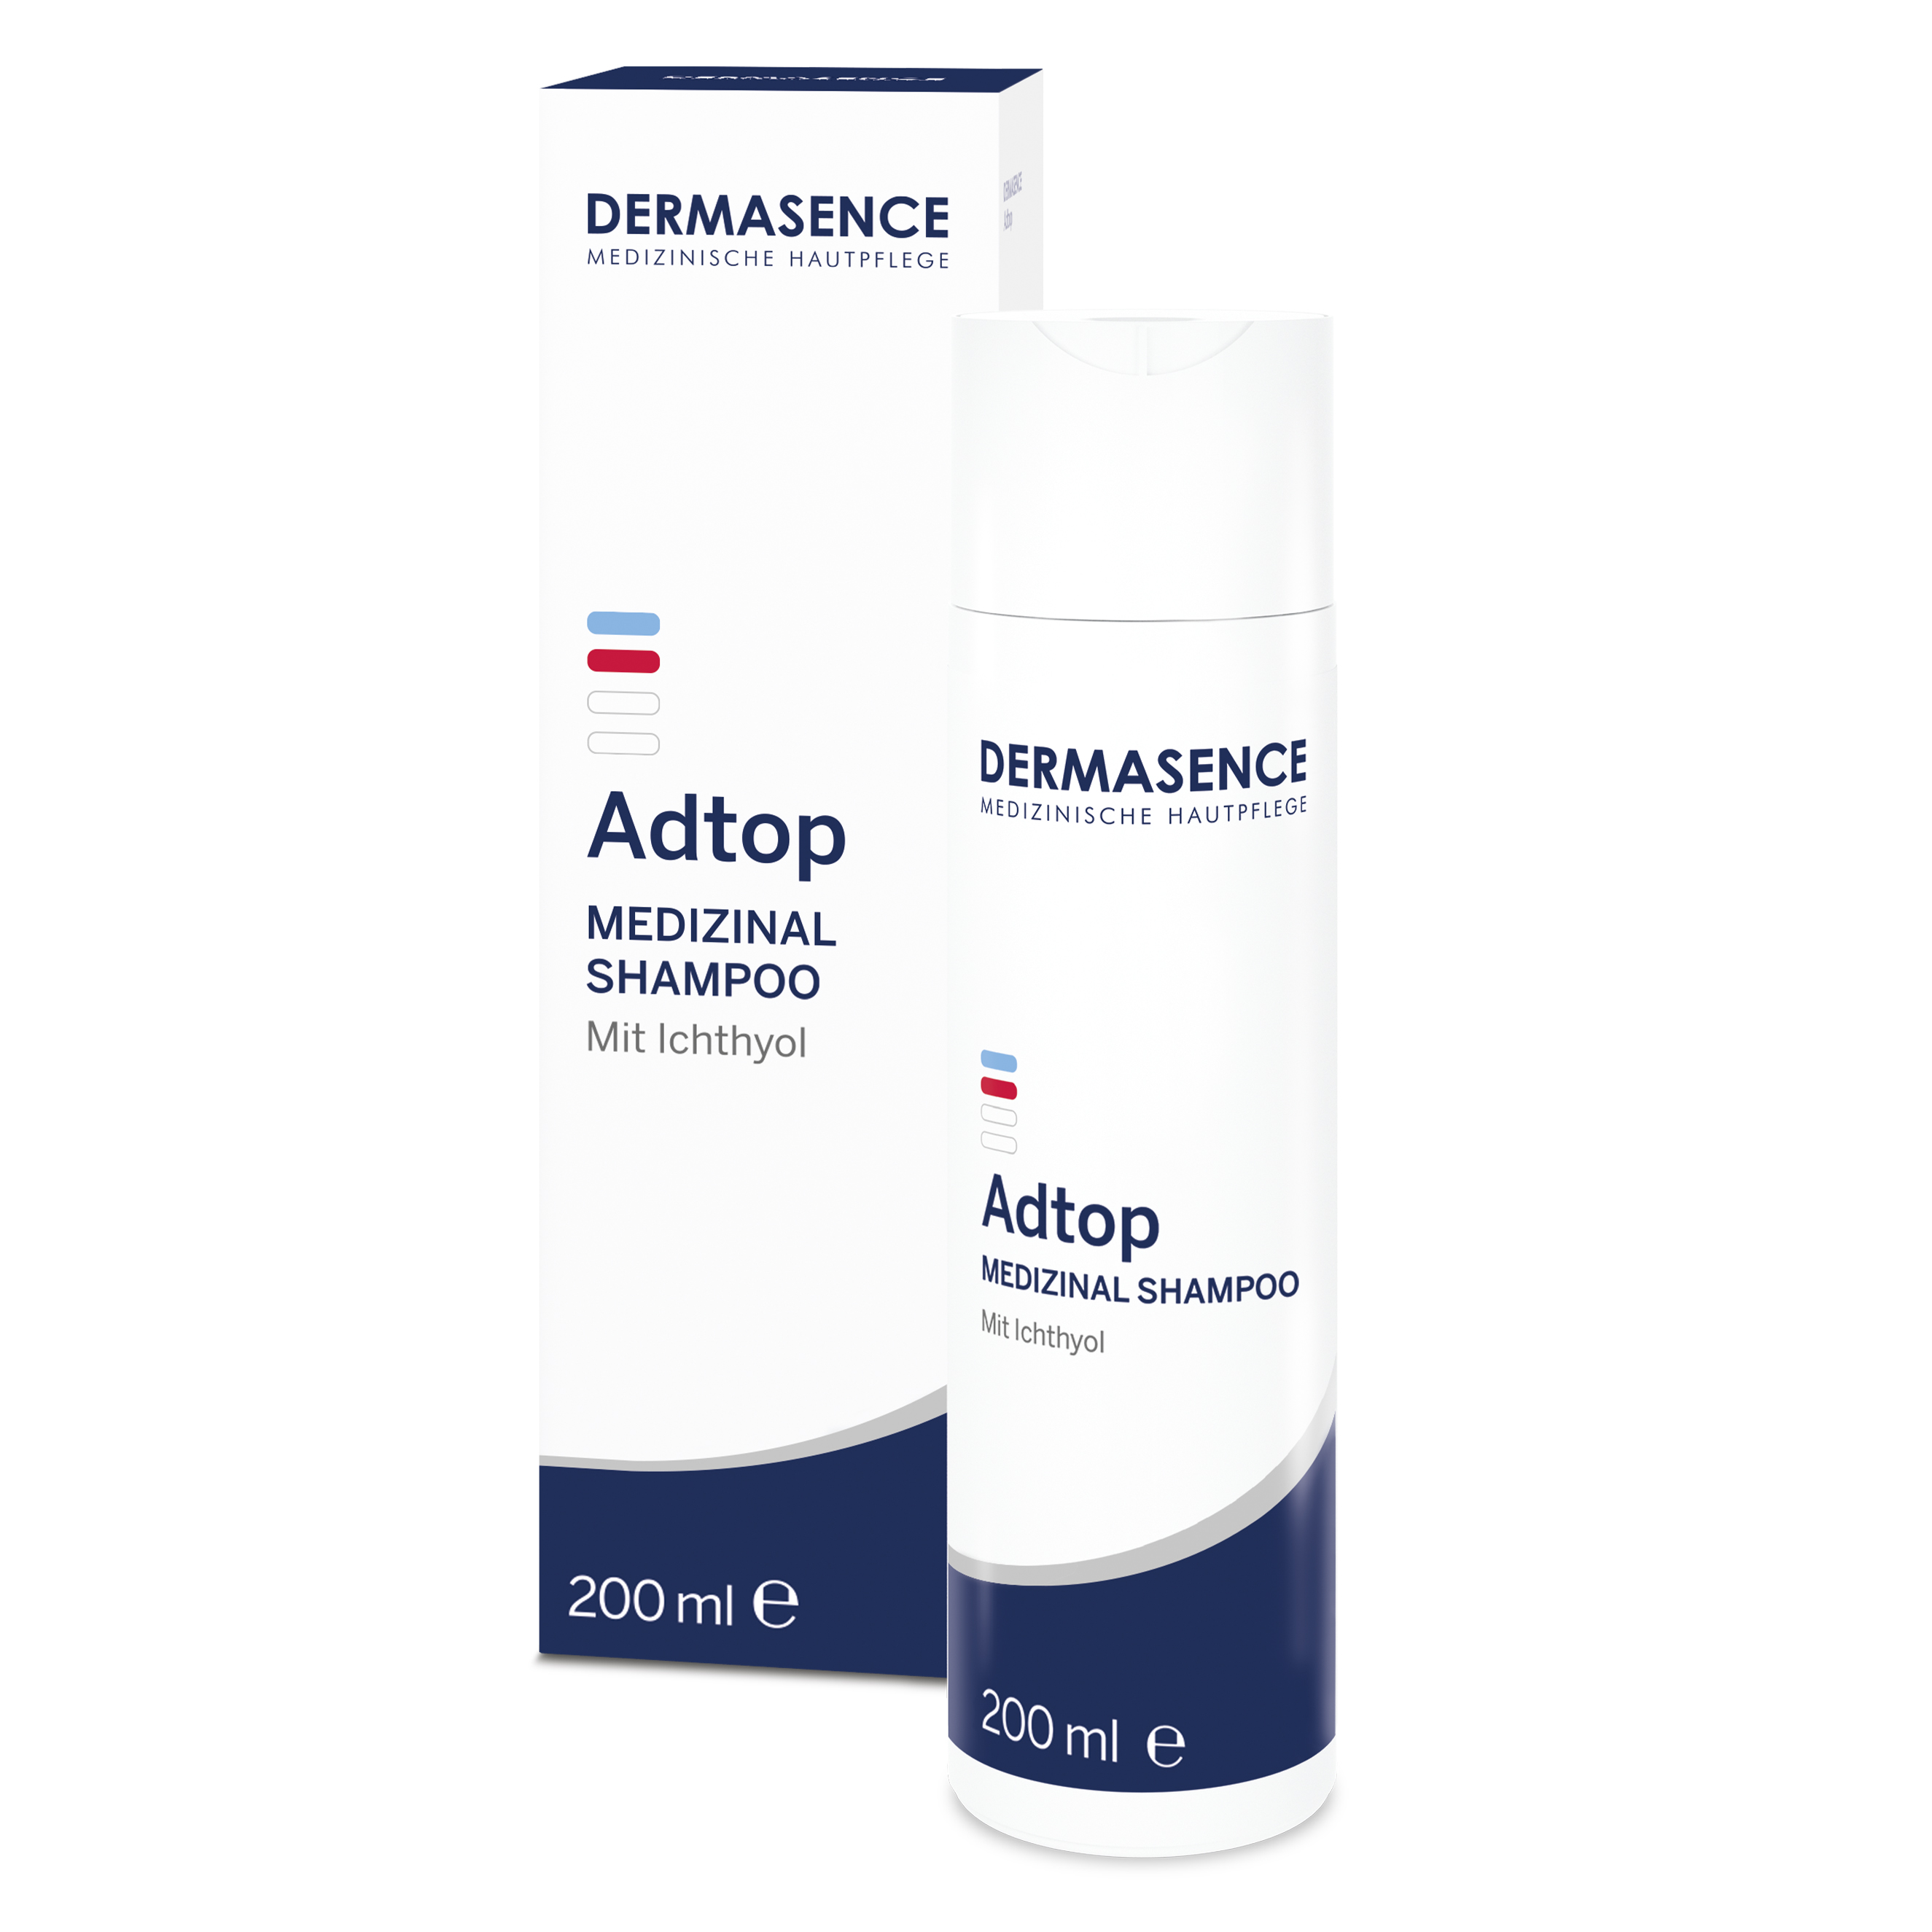 Dermasence Adtop Medizinal Shampoo (200 ml)